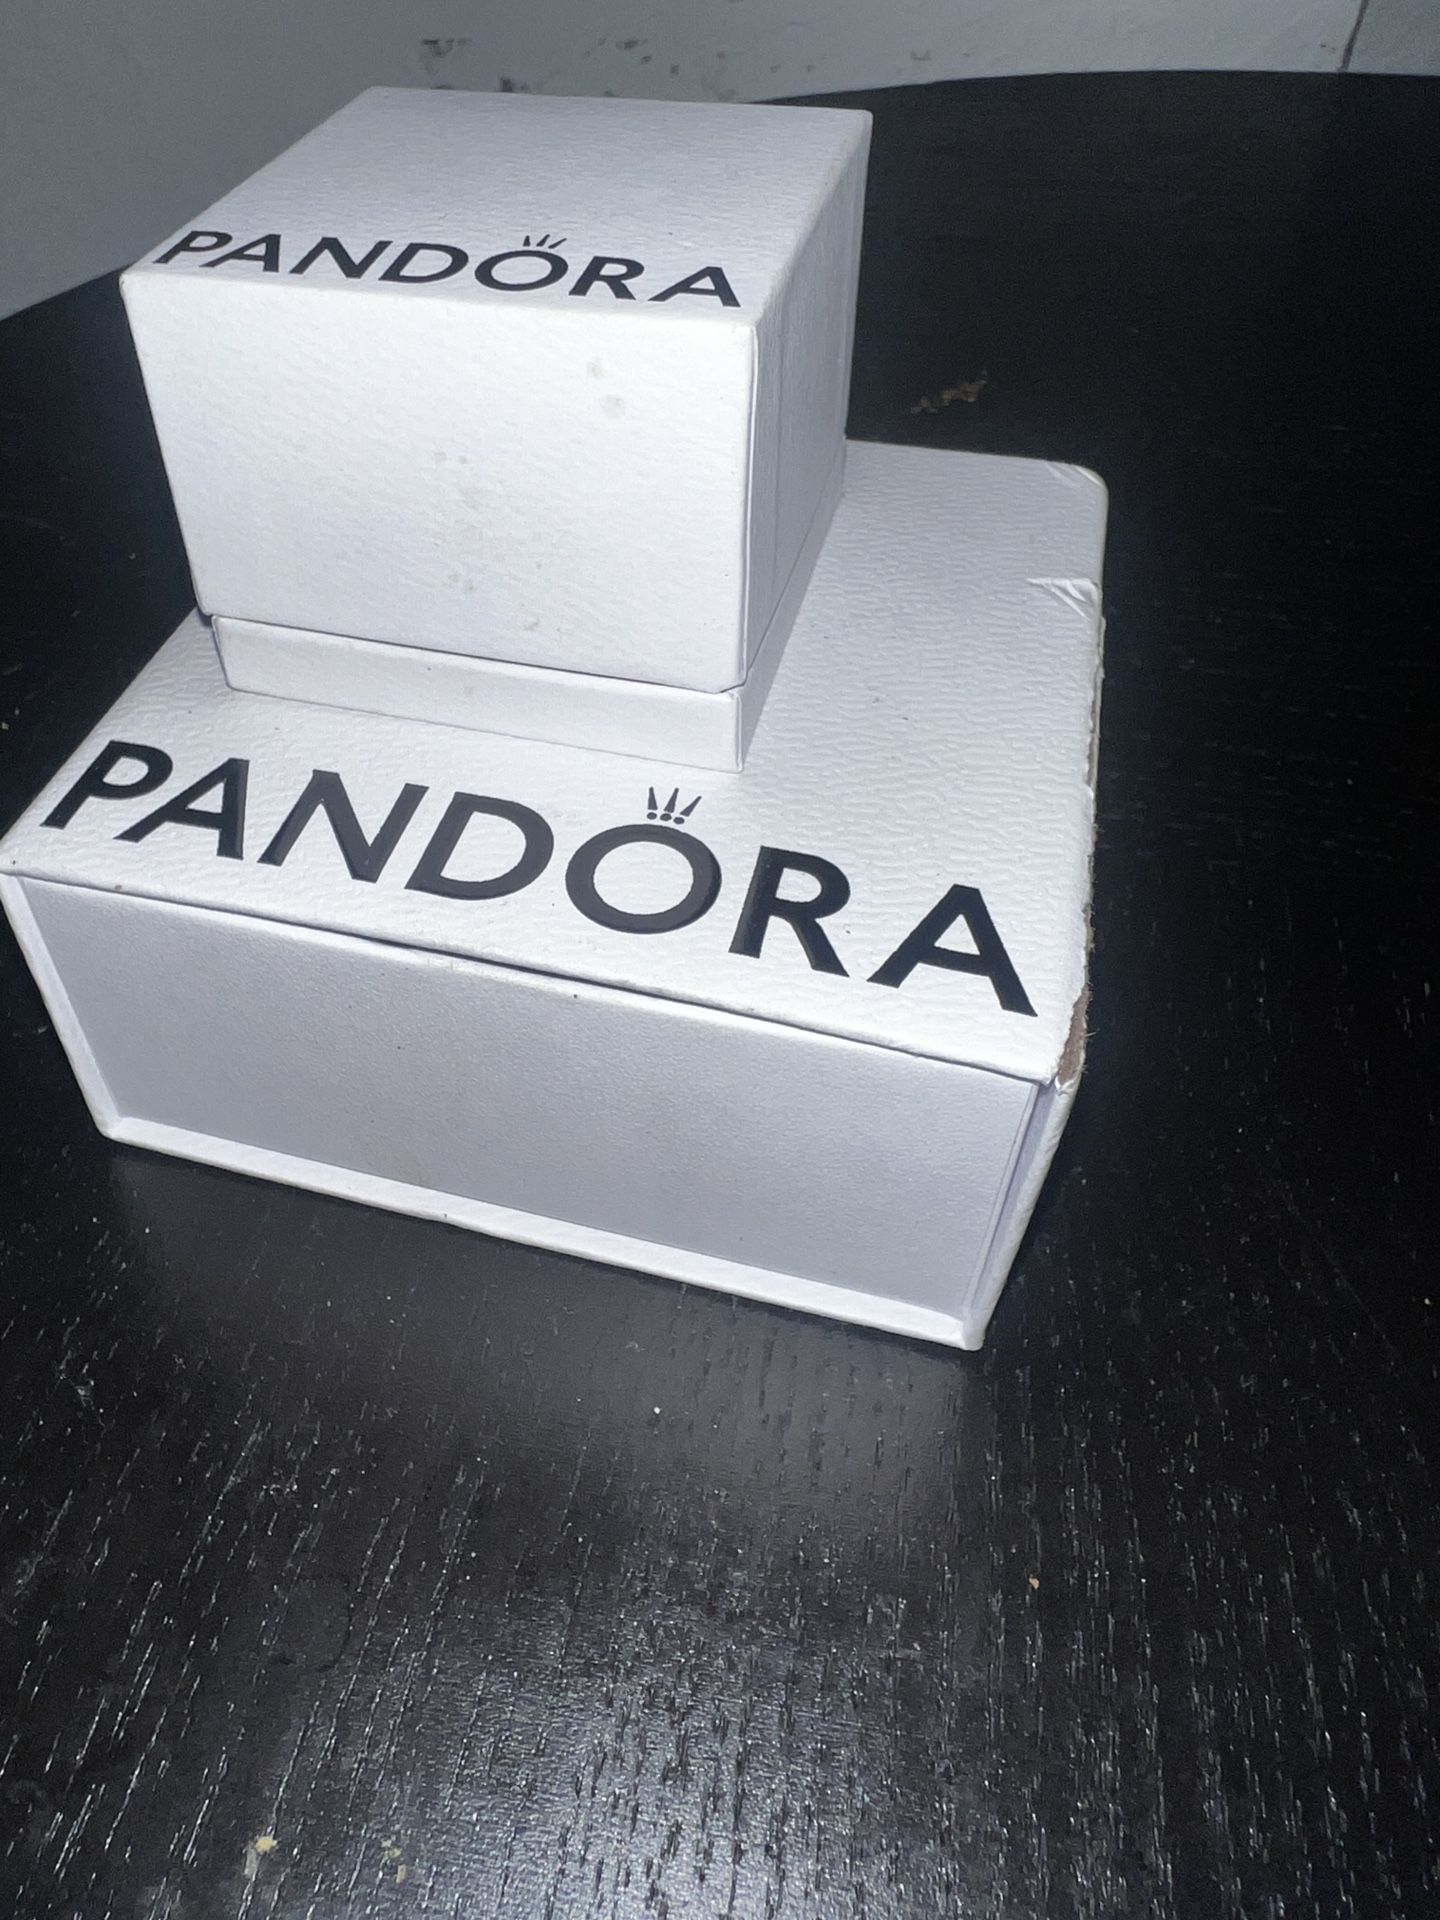 Pandora Bracelet & Charm